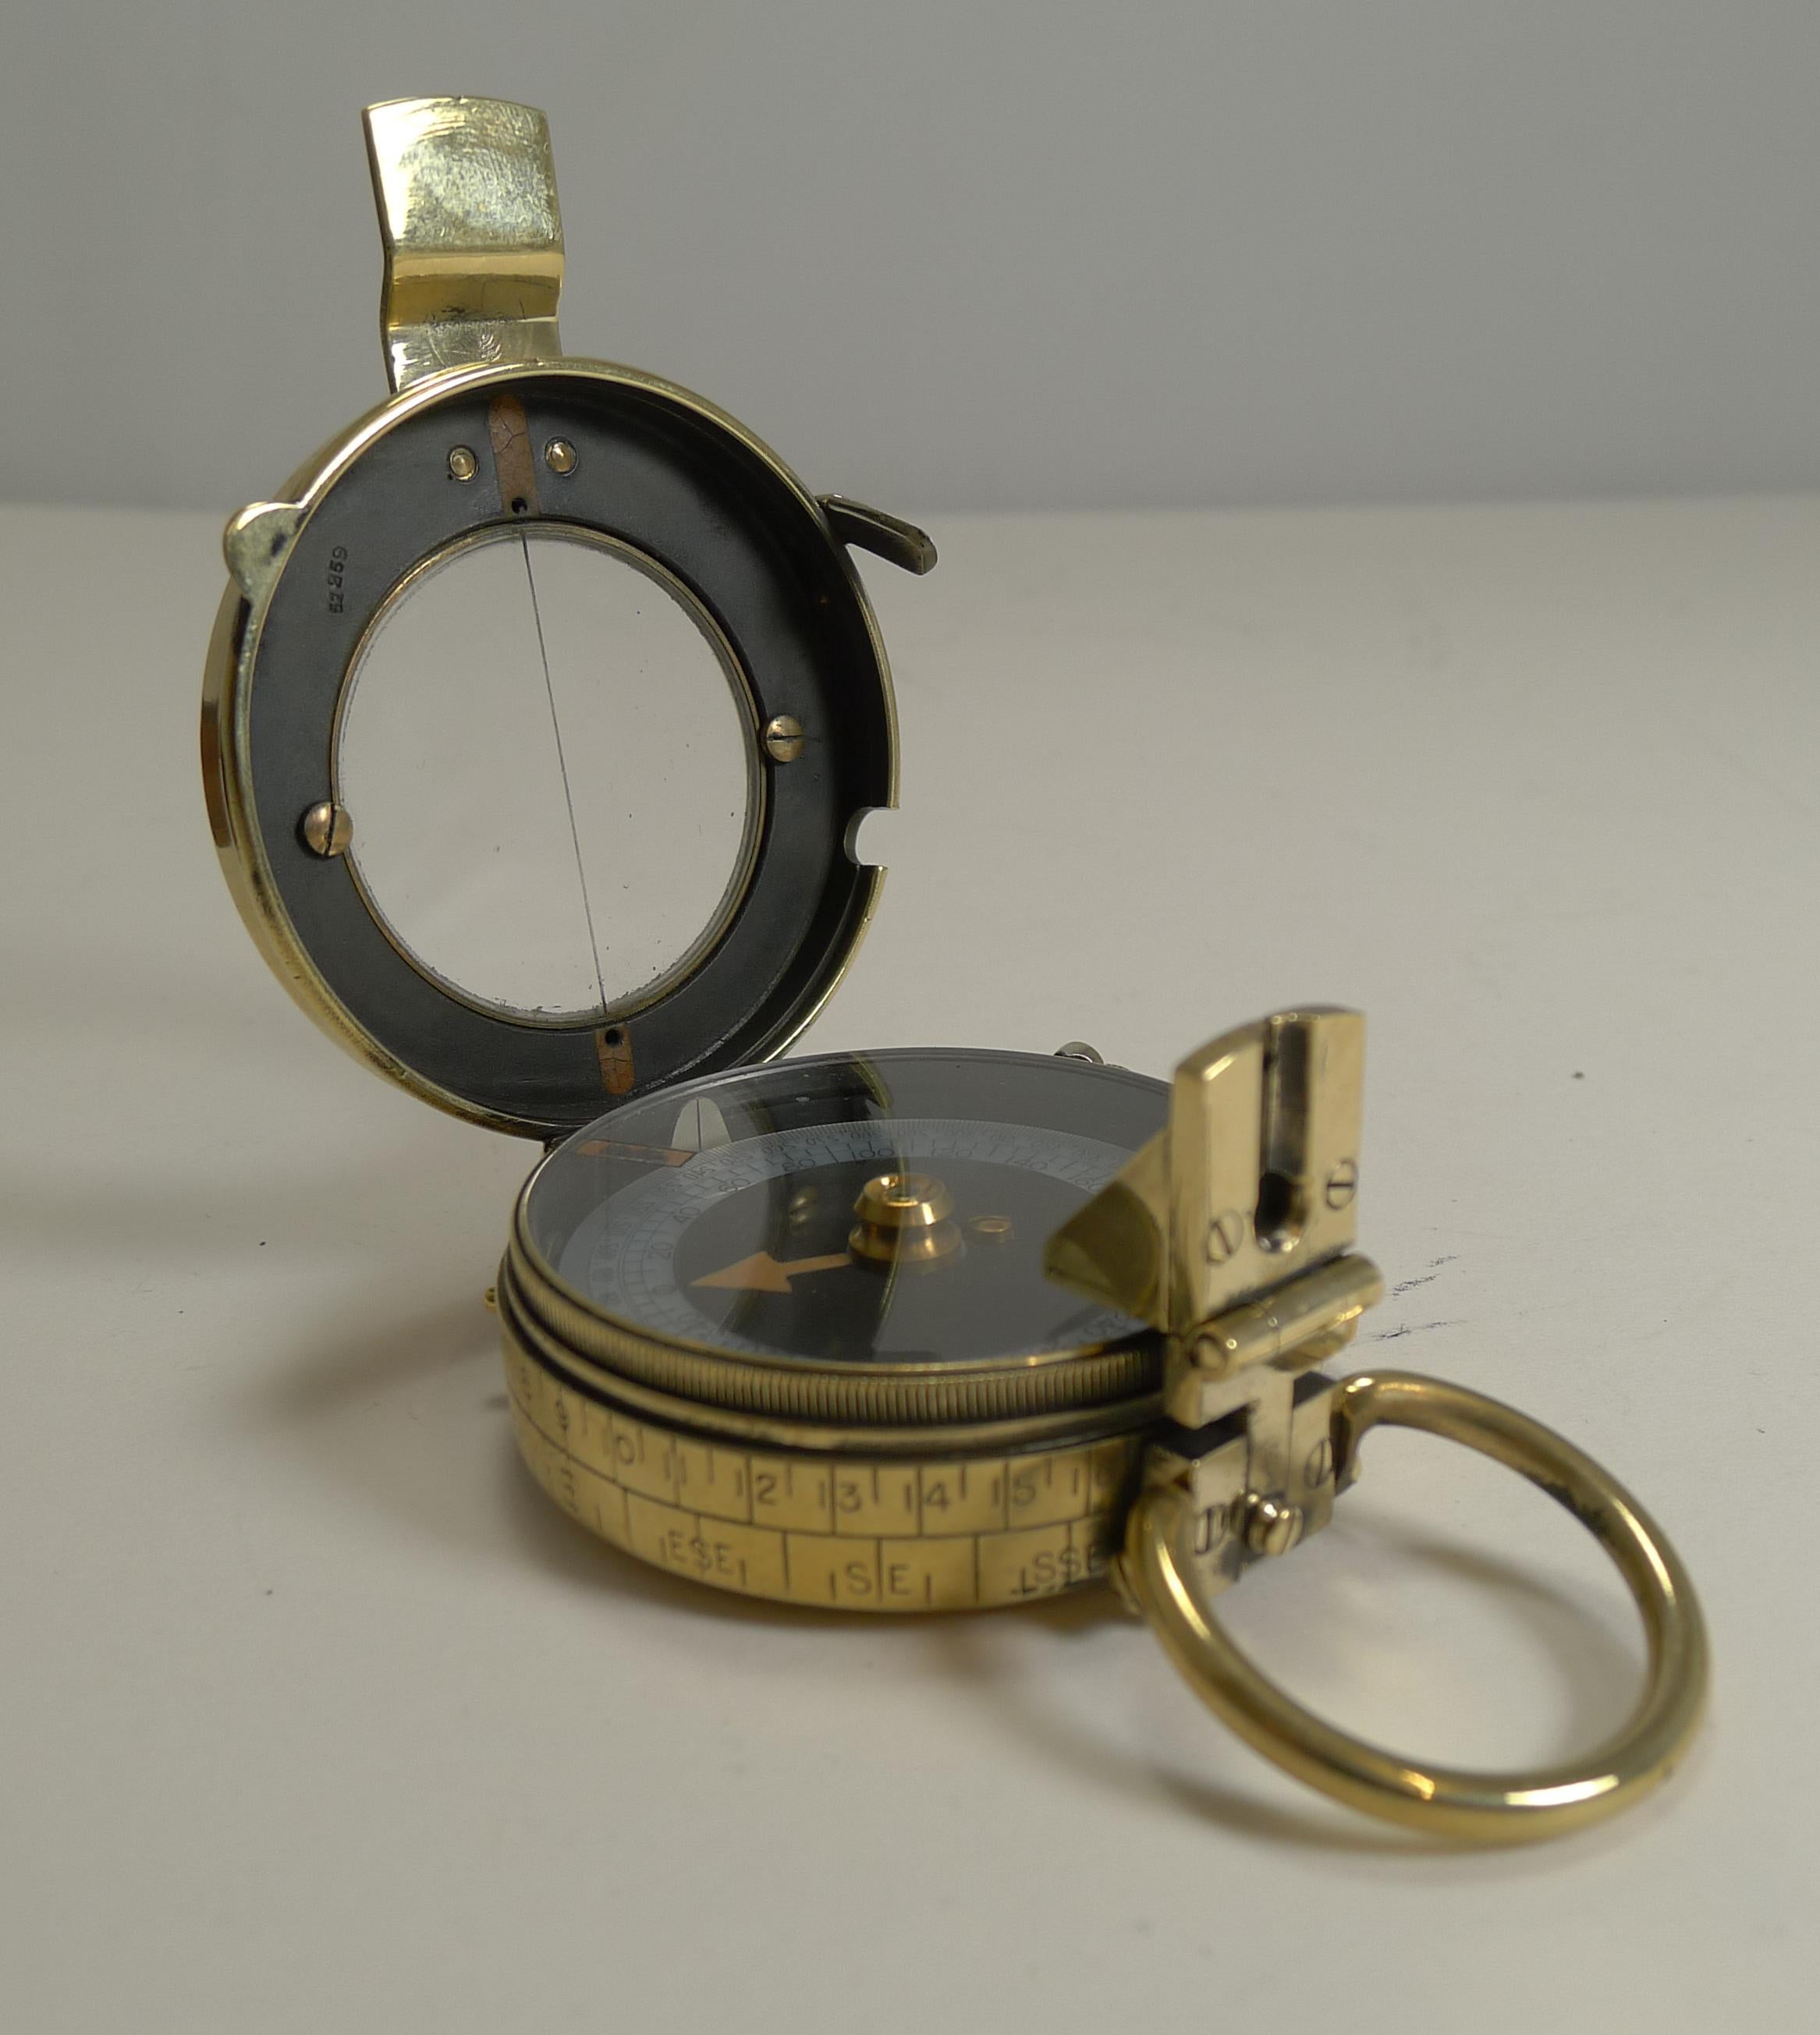 Brass WW1 1917 British Army Officer's Compass Verner's Patent MK VIII by French Ltd